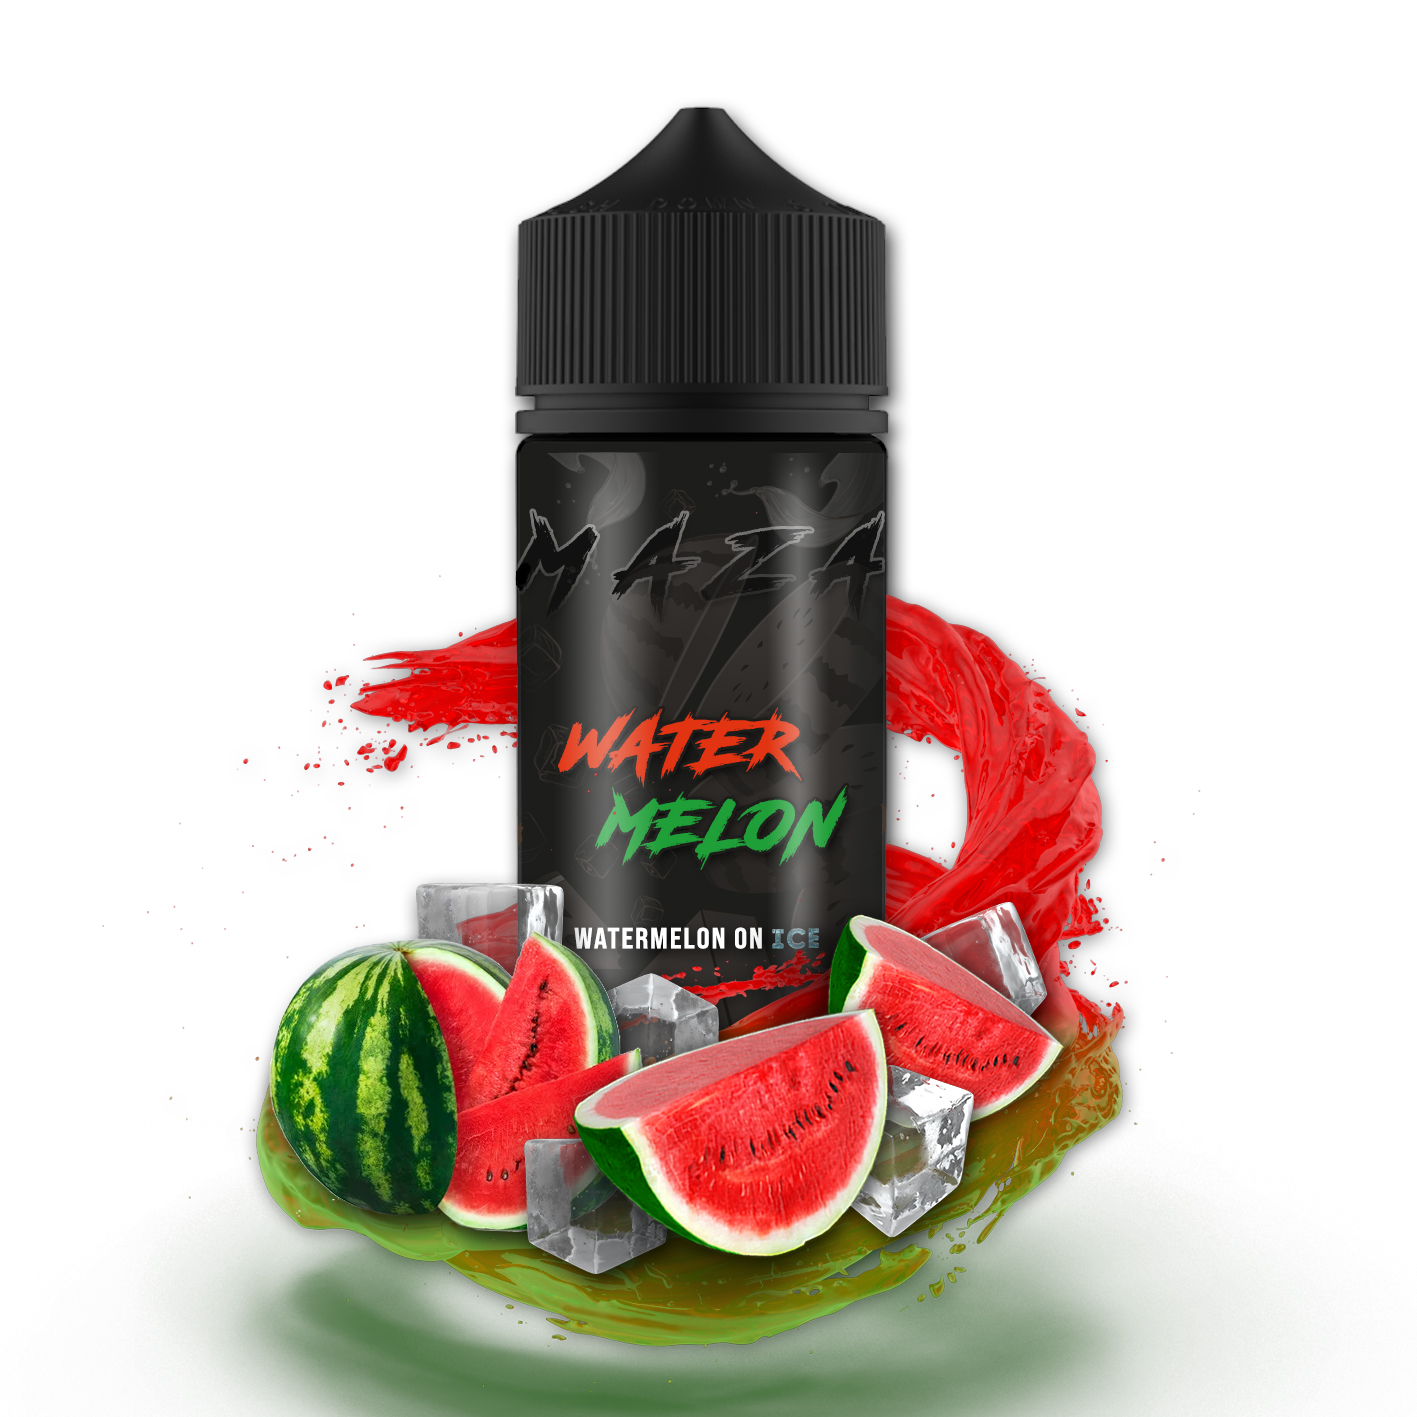 Maza – Watermelon On Ice